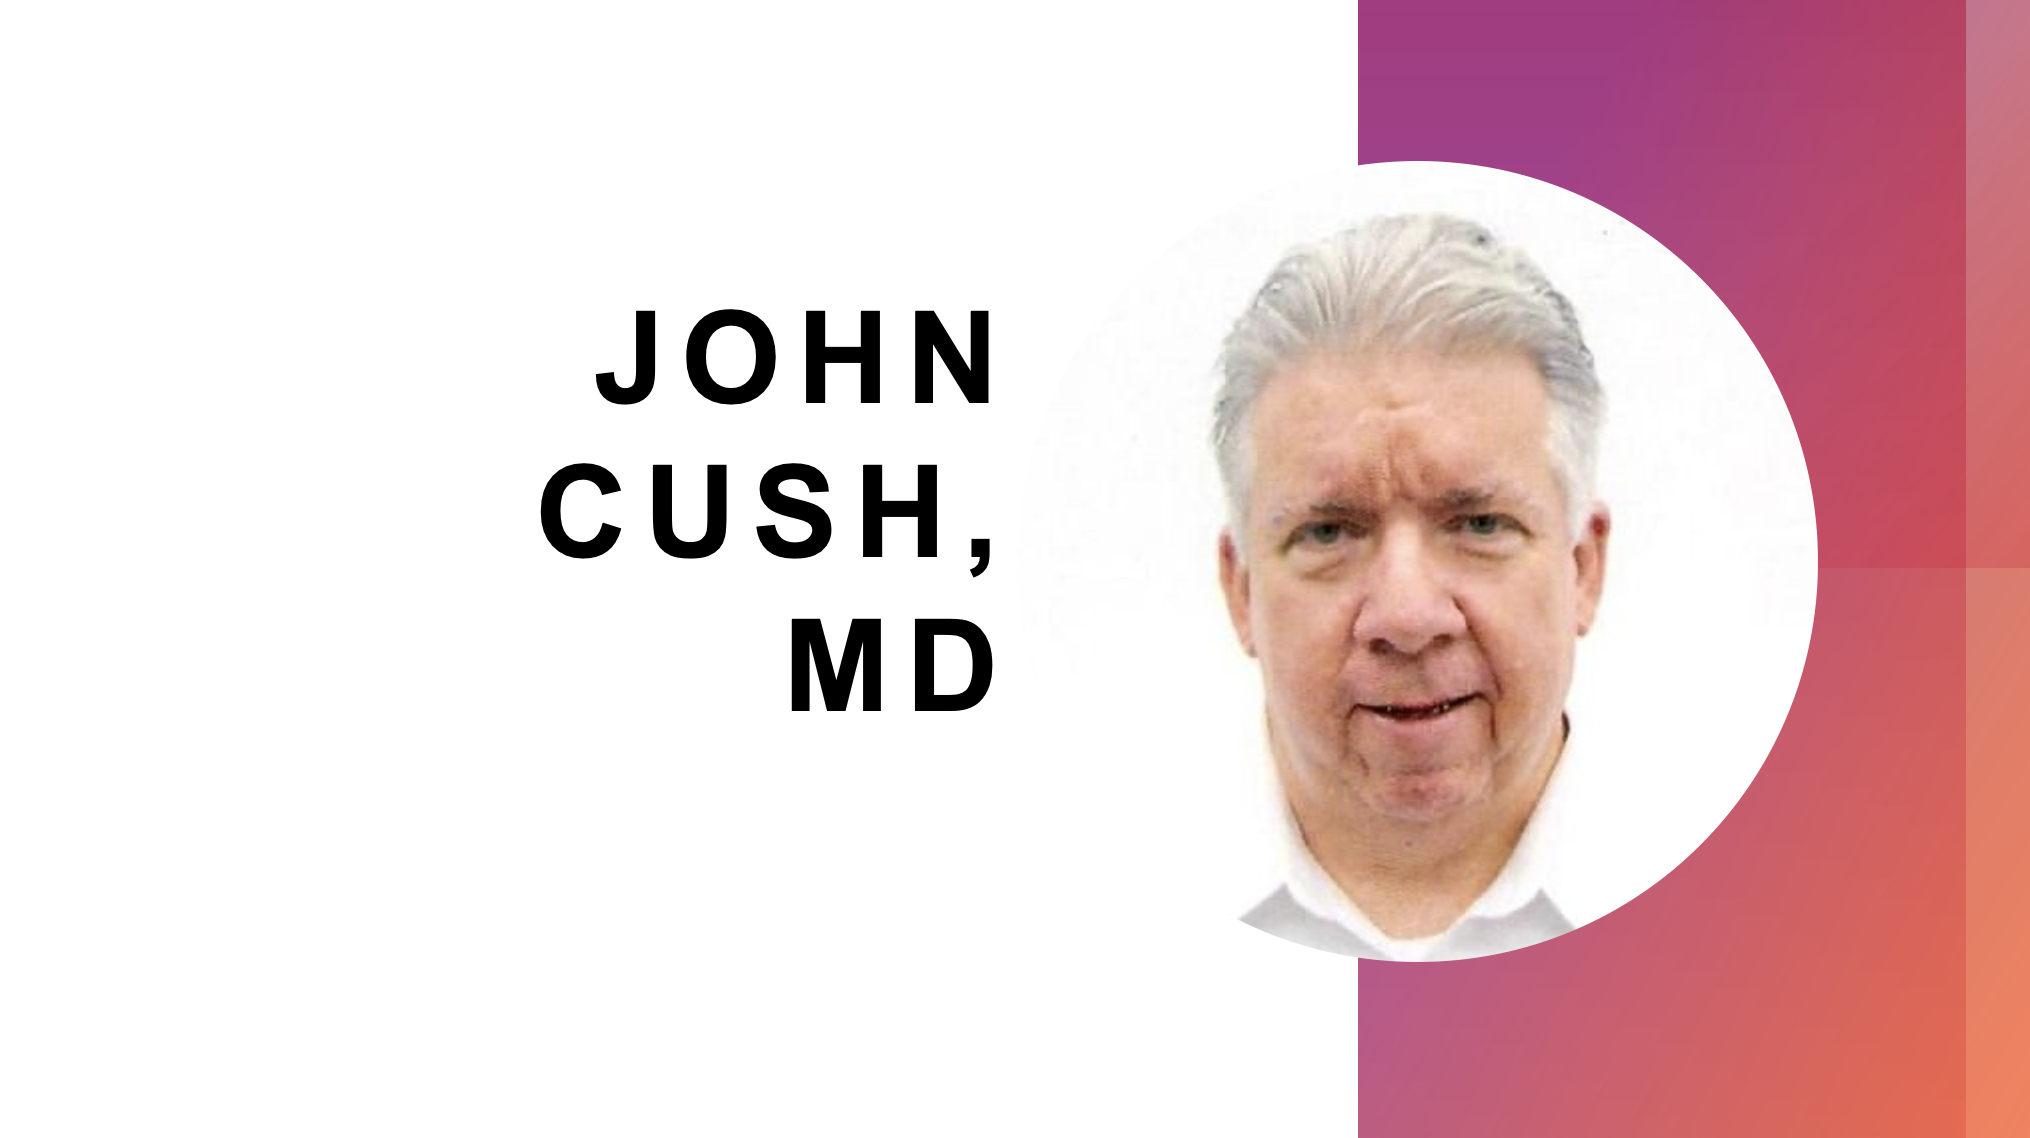 John Cush, MD: Rheumatoid Arthritis Year in Review